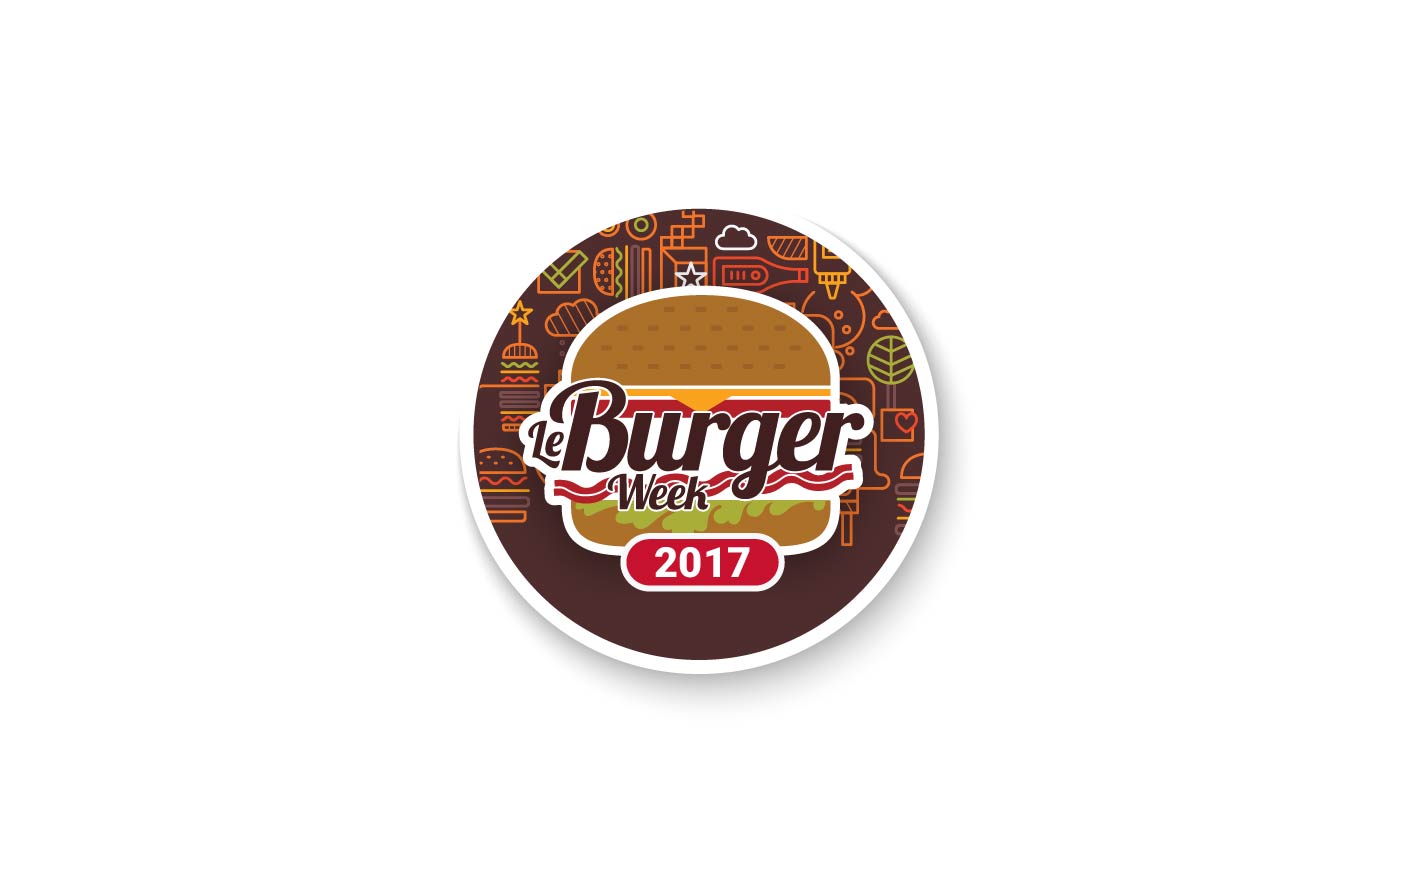 Le Burger Week restaurant sticker design by Loogart